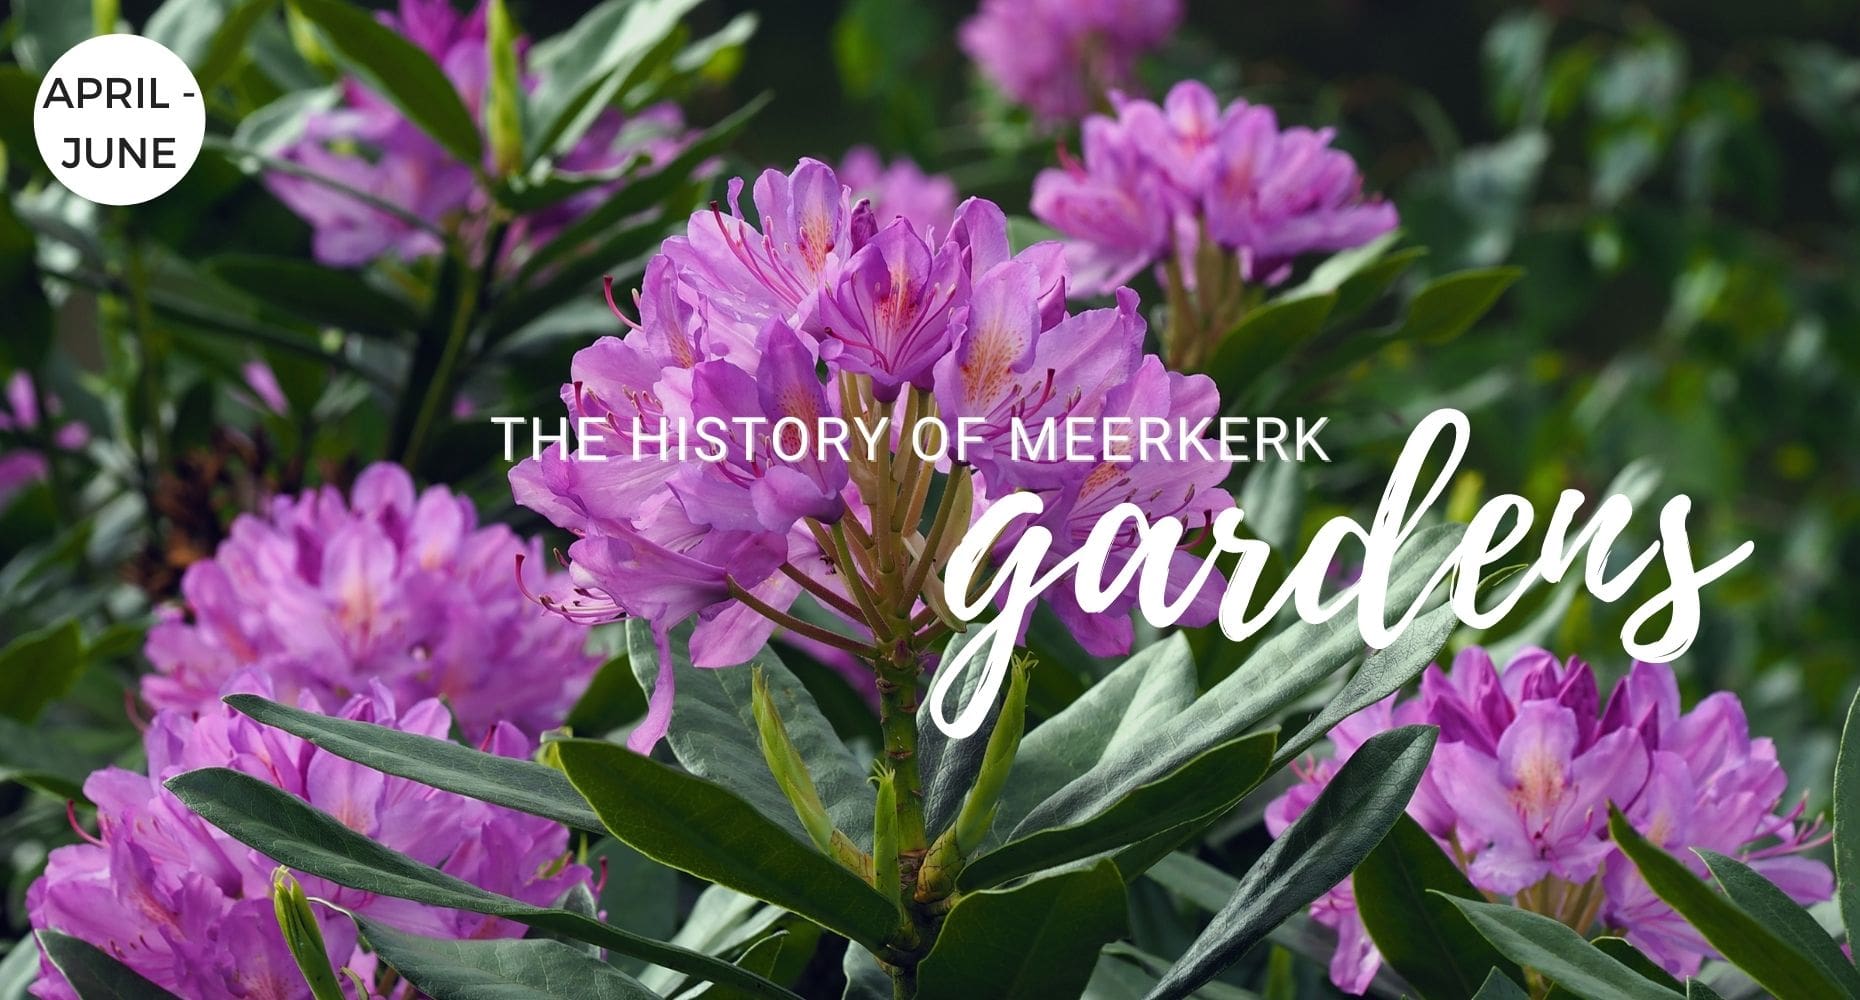 The History of Meerkerk Gardens